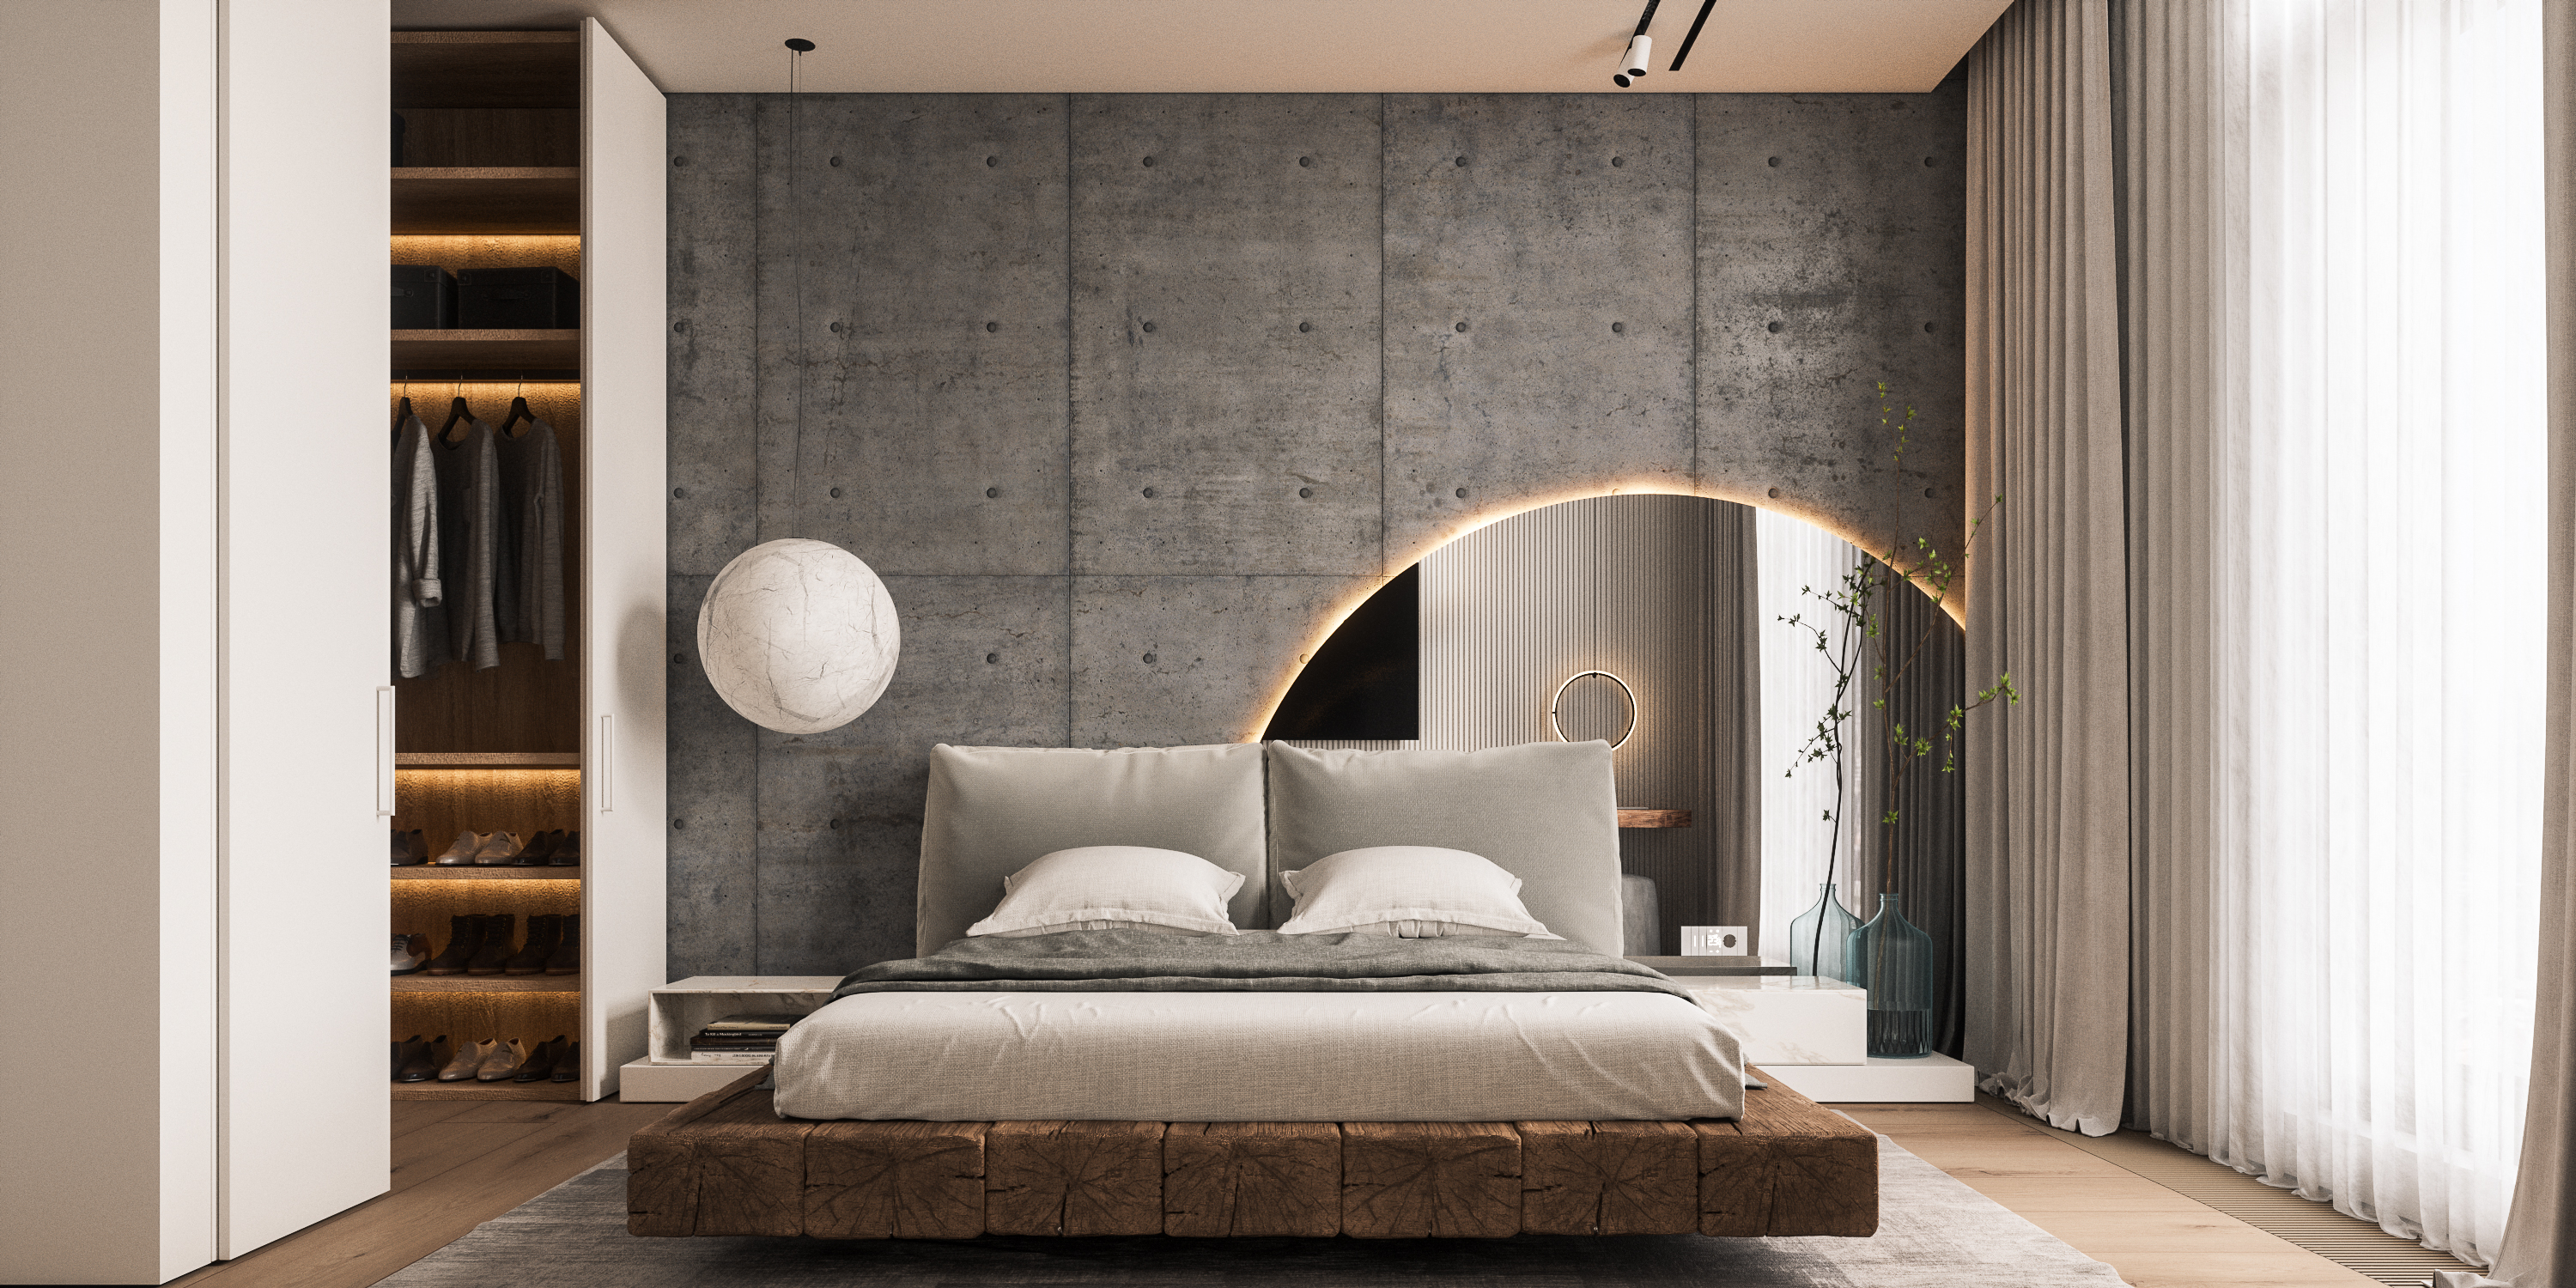 Bucharest Penthouse Interior Design - Modern Industrial Bedroom Wooden Bed - Hype Project - arh. Adrian Ianculescu (1)